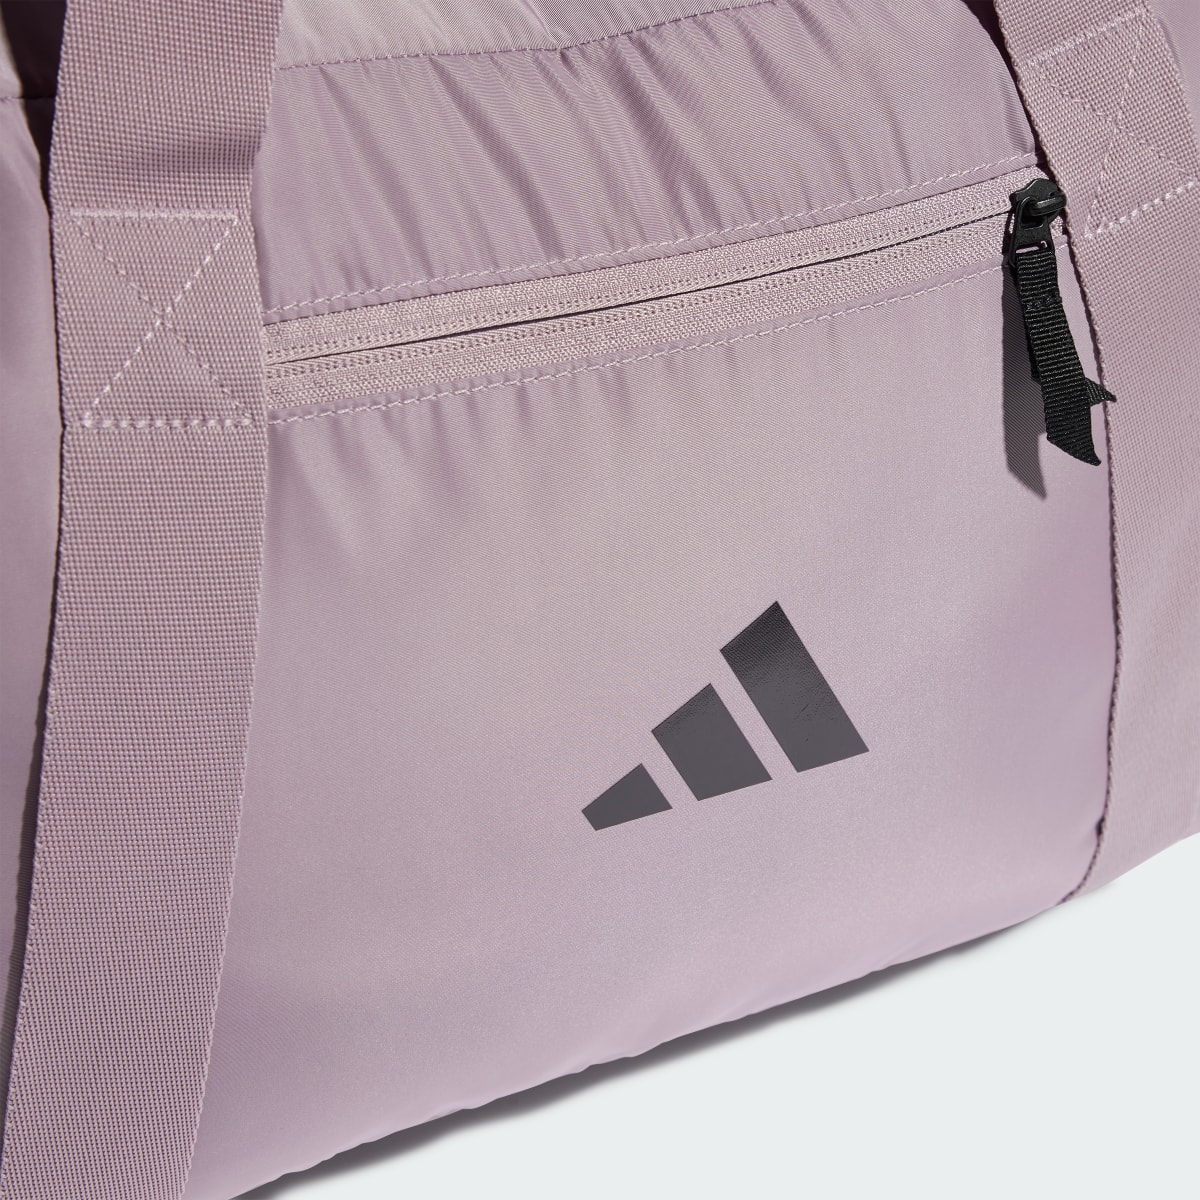 Adidas Sport Bag. 6